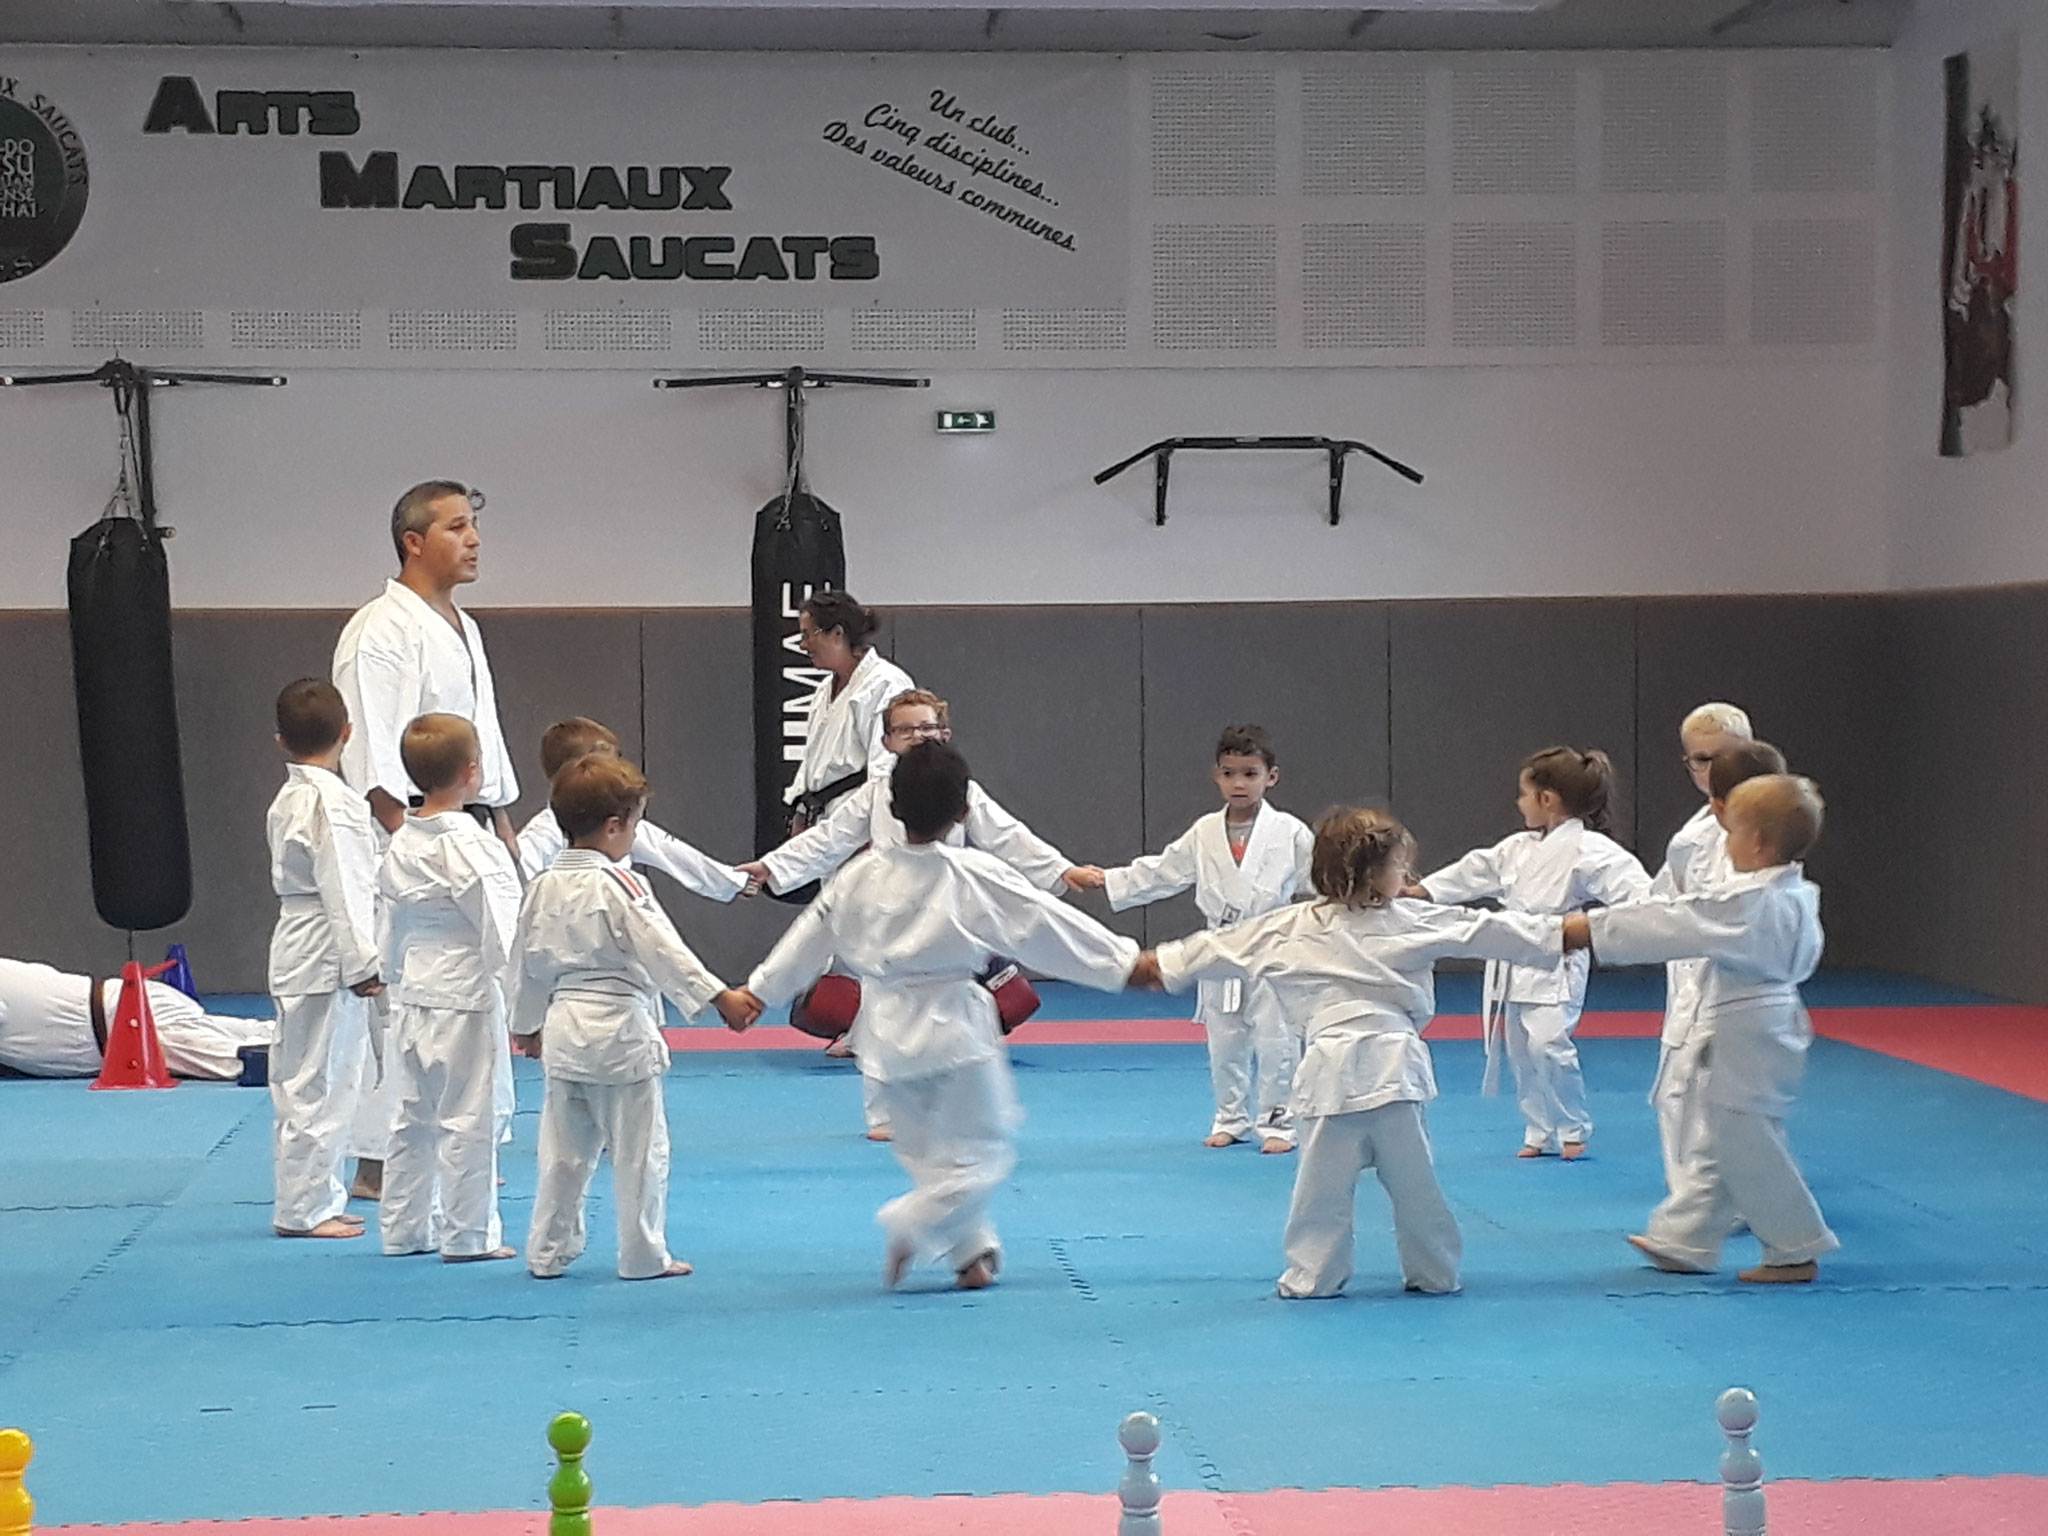 arts-martiaux-saucats-karate-do-2